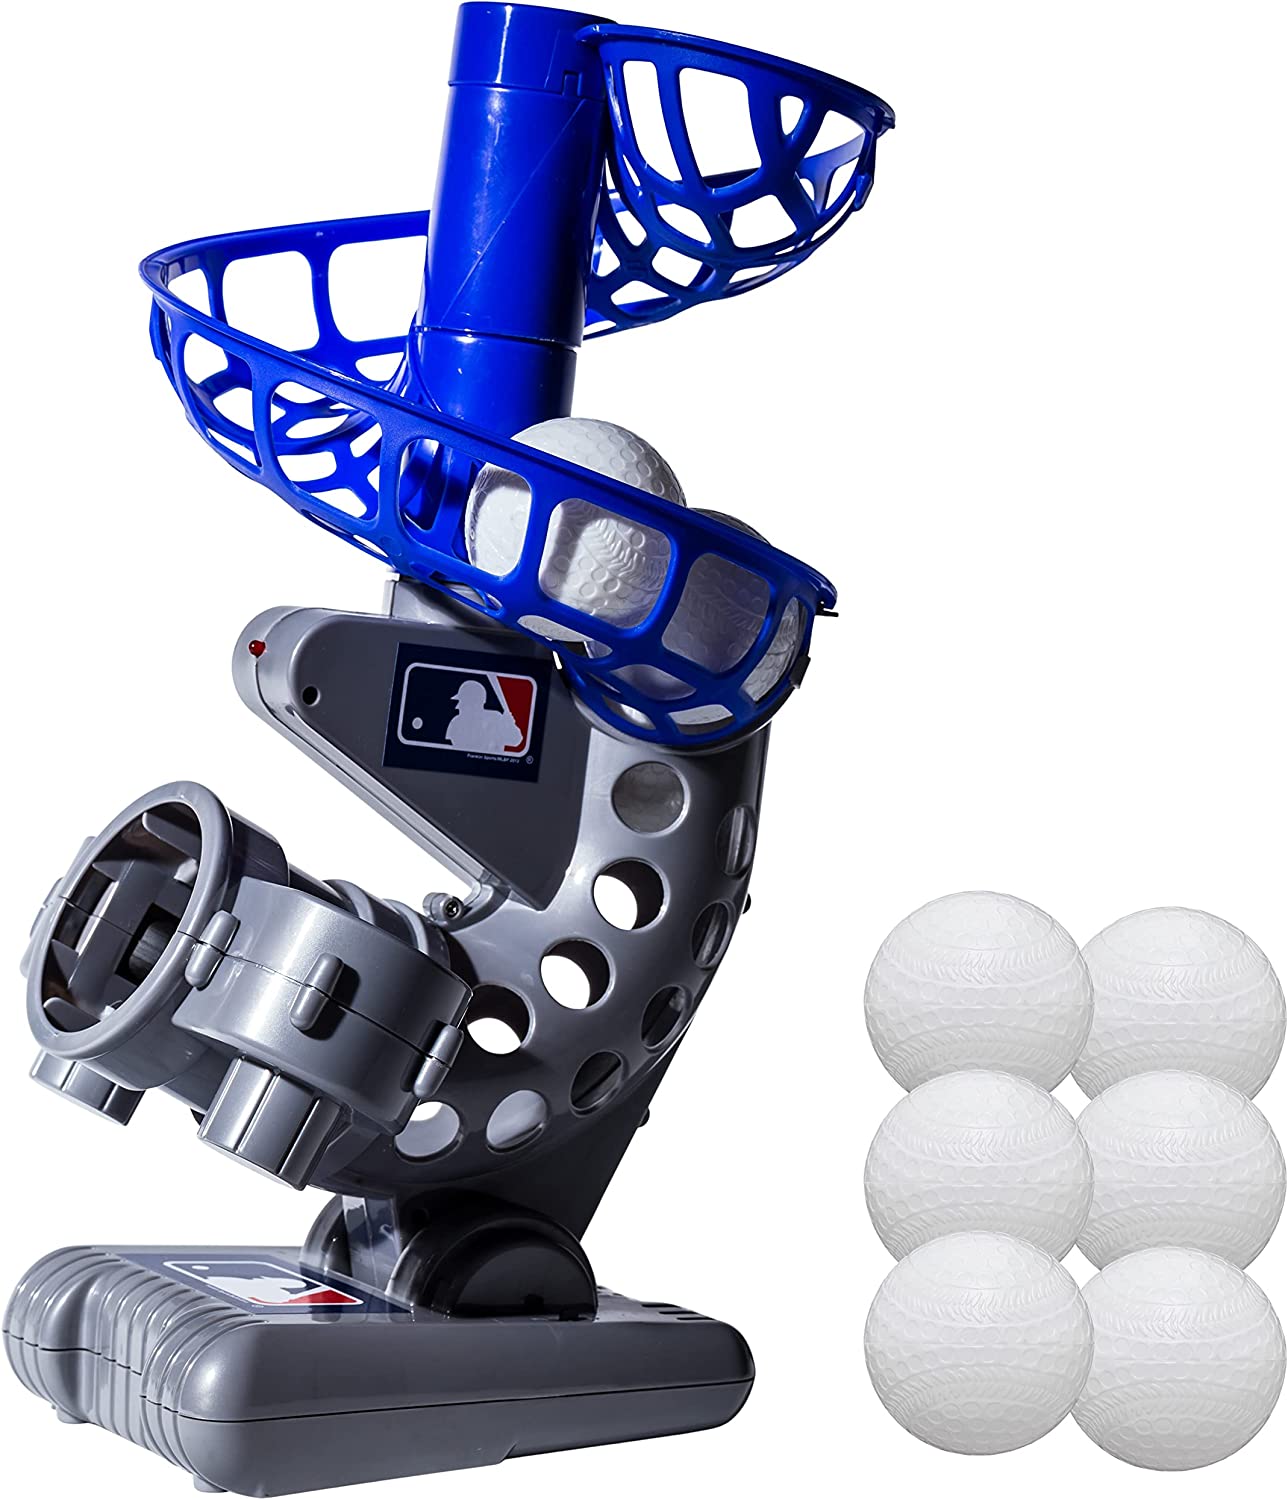 Franklin Sports MLB Plastic Baseball Pitching Machine w/ 6 Plastic Balls $21.65 + Free Shipping w/ Prime or on $25+